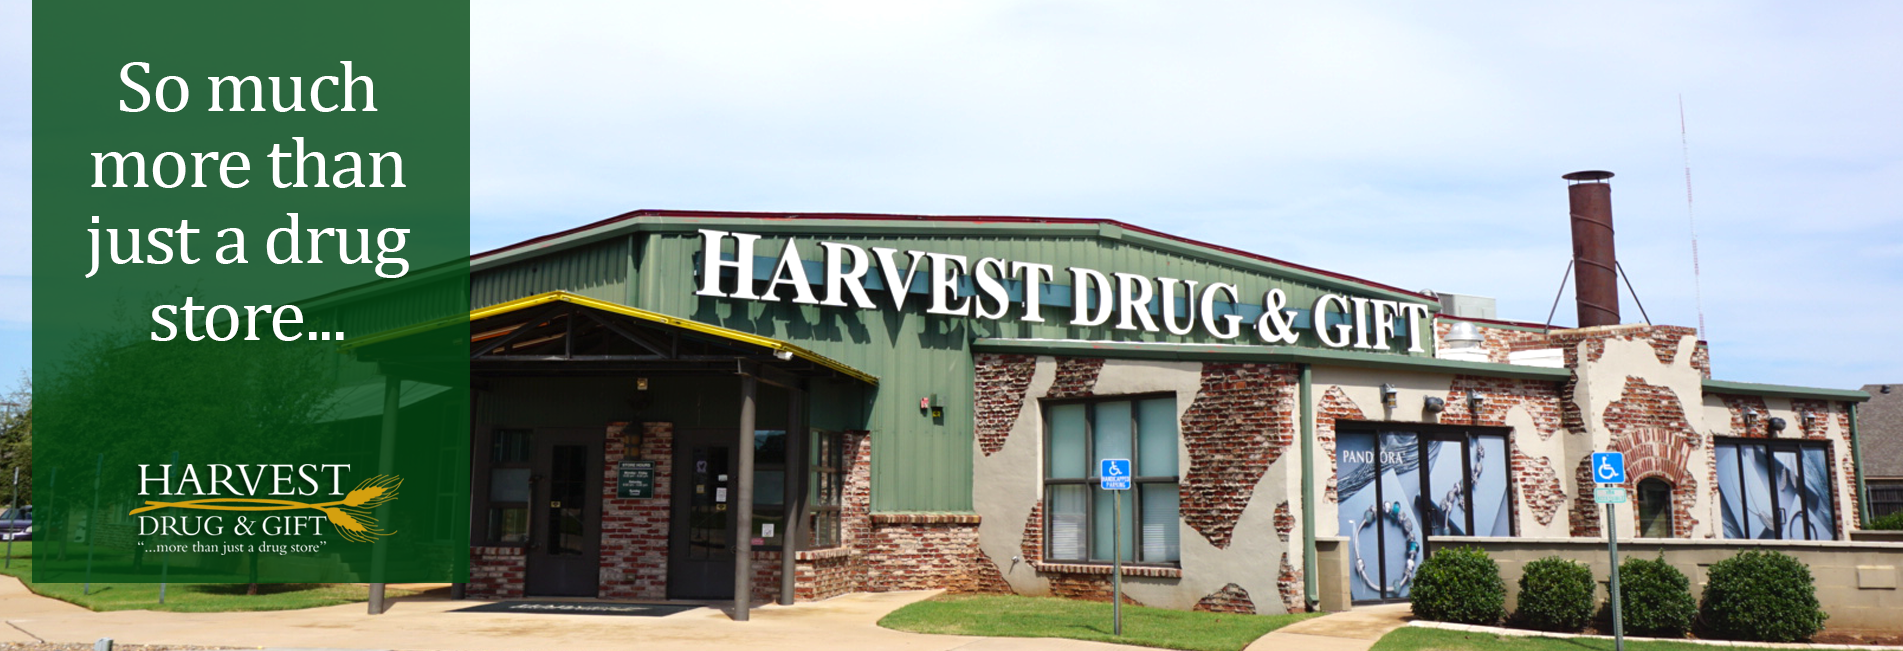 Harvest Drug & Gift storefront